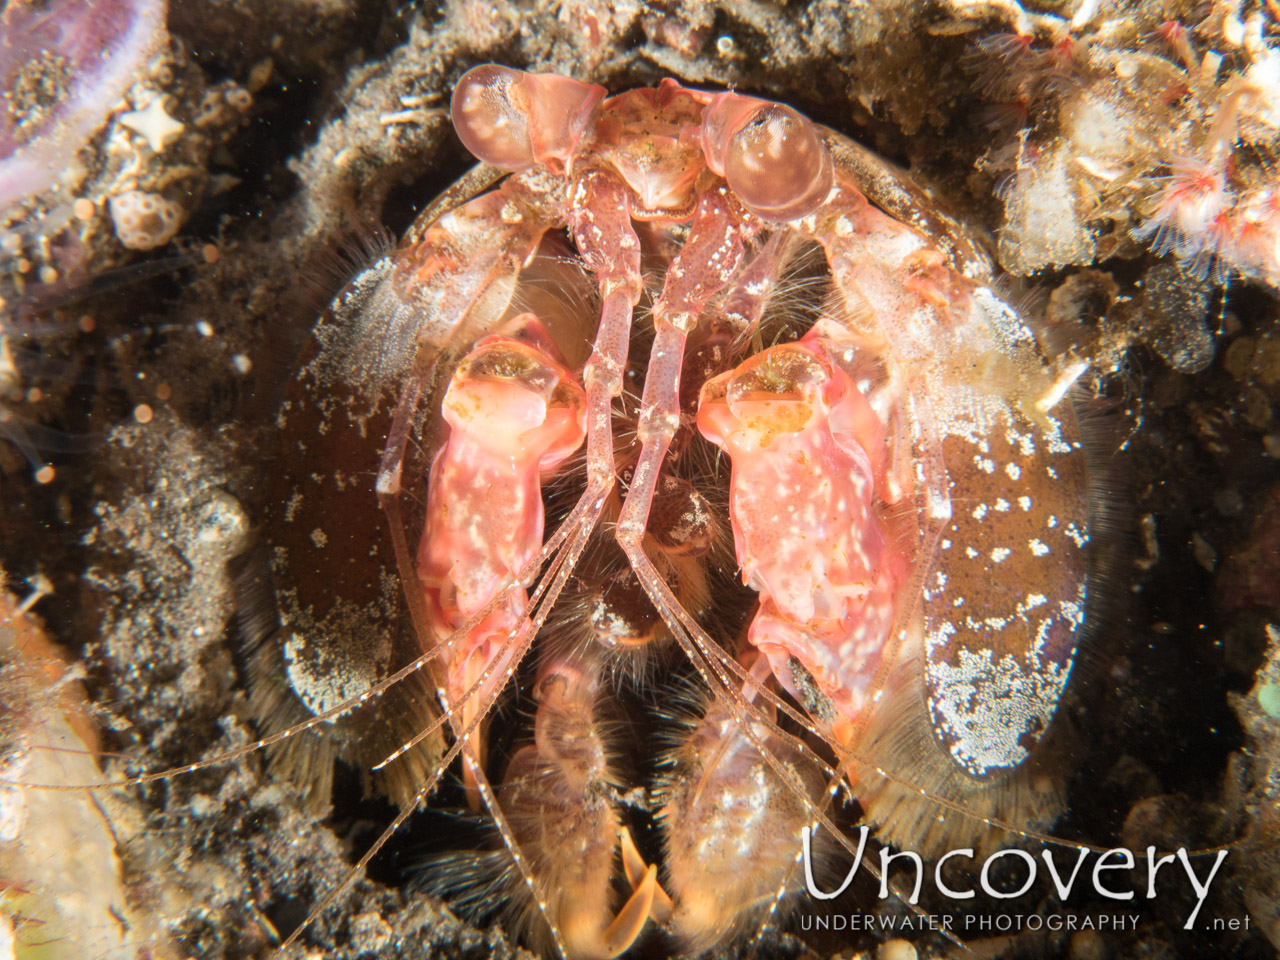 Giant Mantisshrimp, photo taken in Indonesia, Bali, Tulamben, Sidem